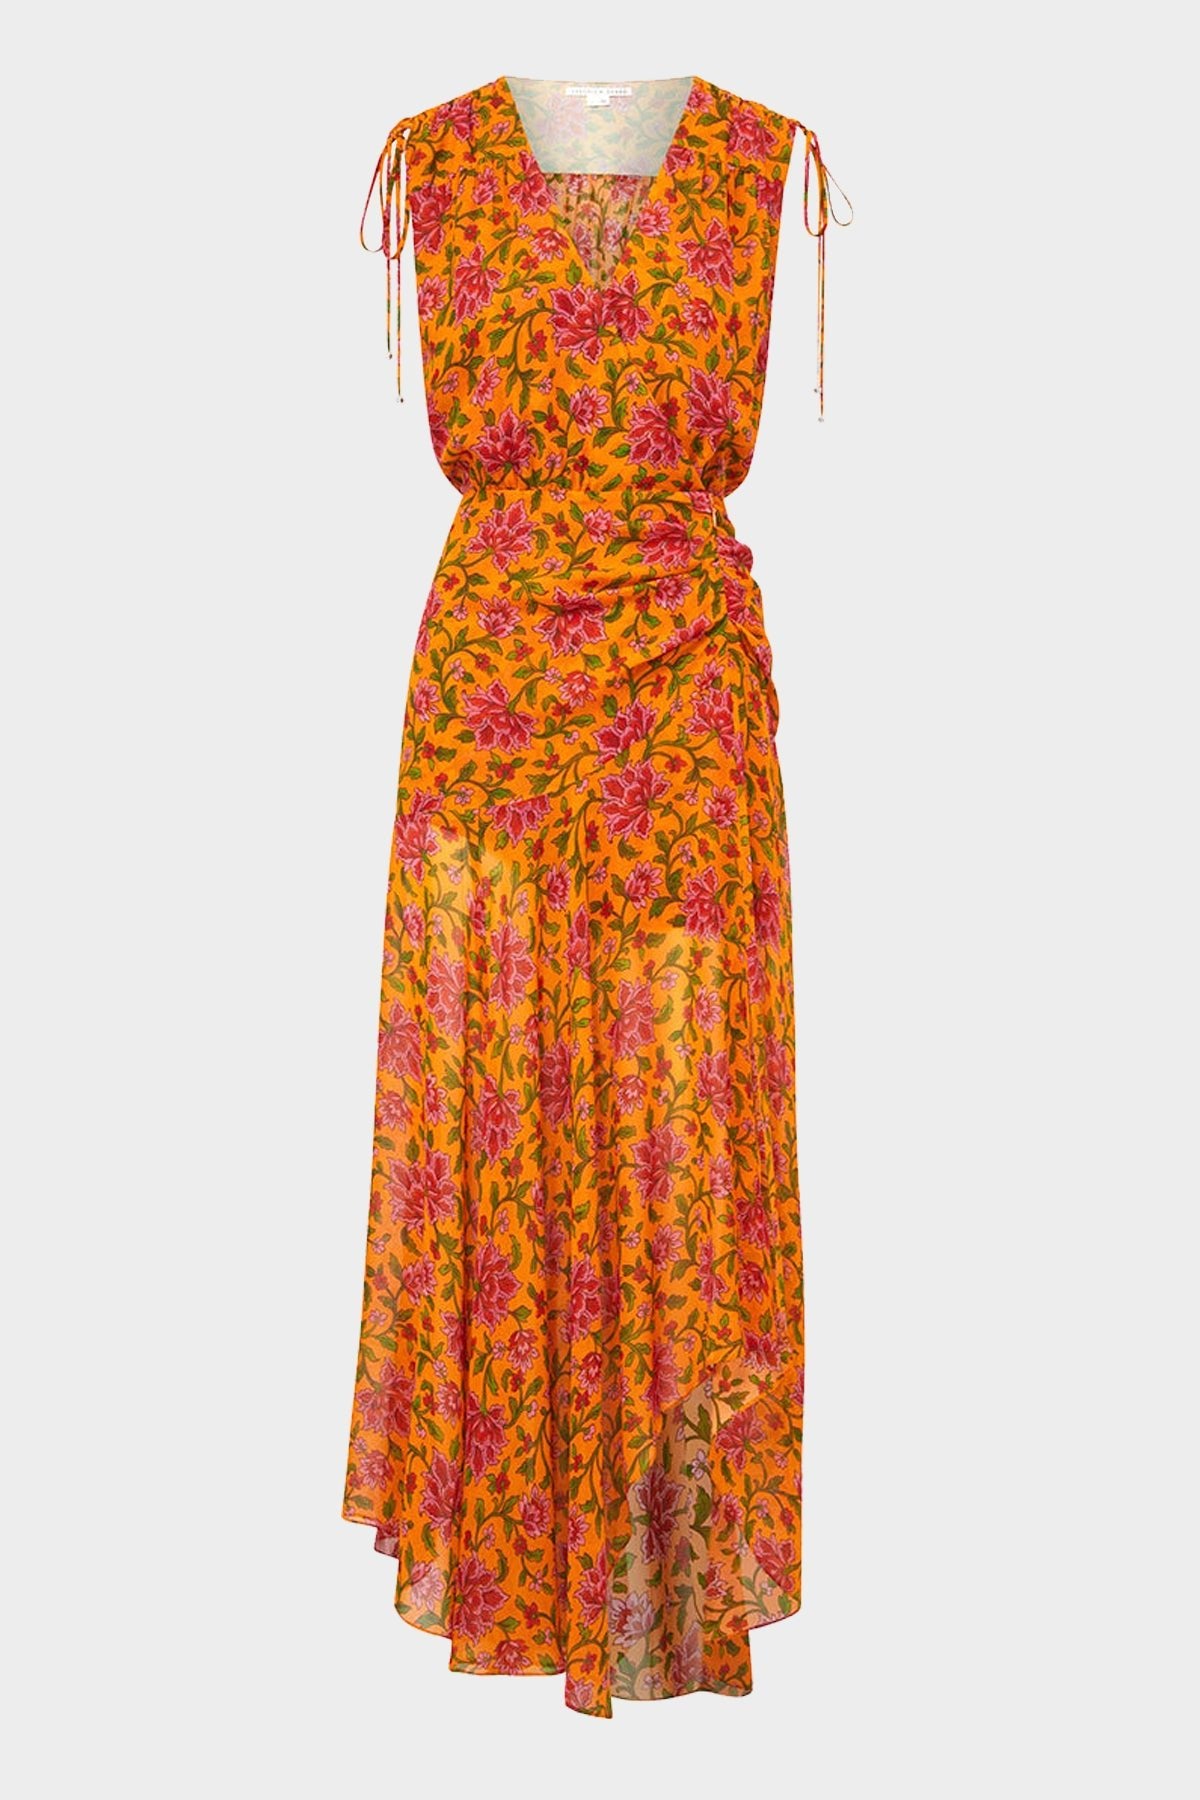 Dovima Silk Dress in Hot Orange Multi - shop-olivia.com